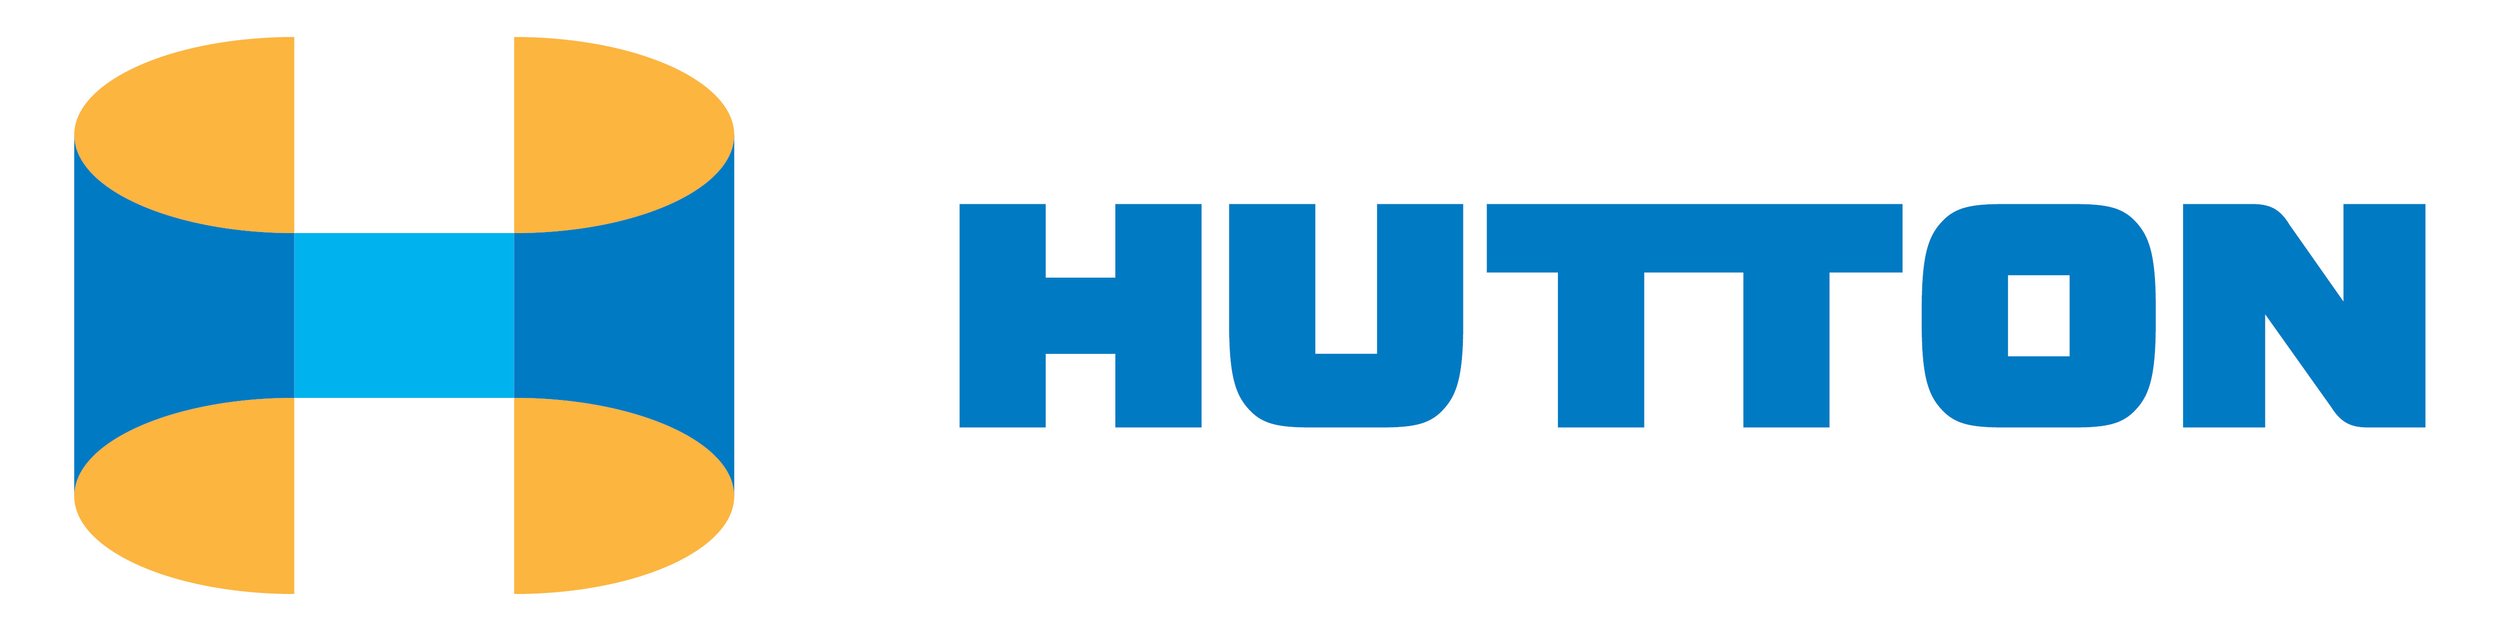 Hutton Logo - Web.jpg